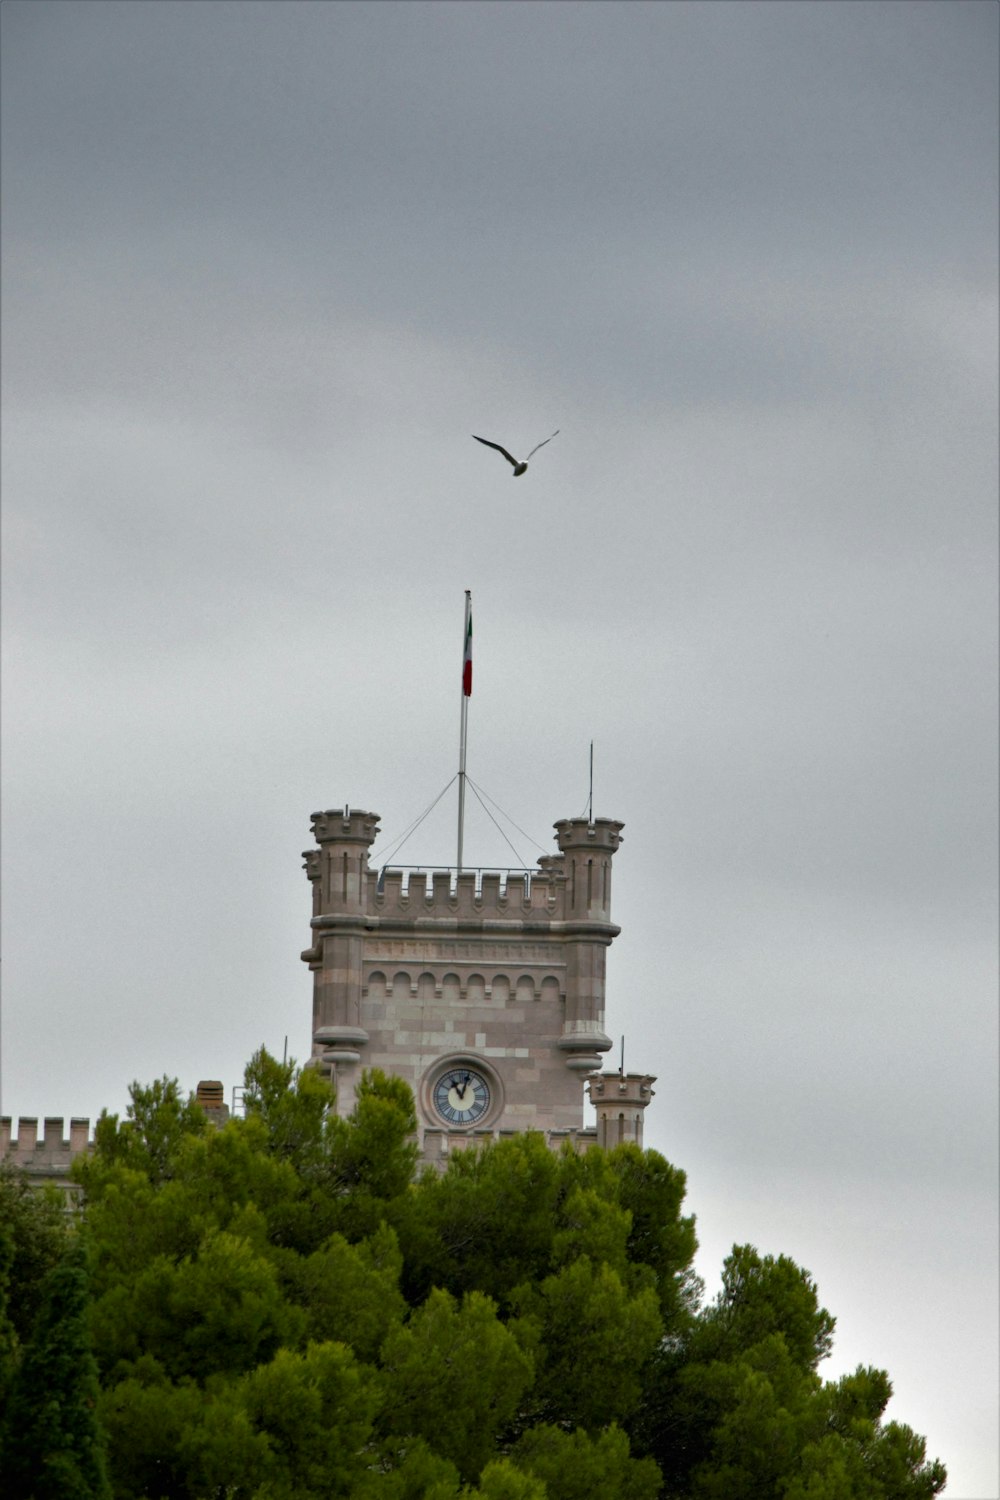 a bird flying over a clock tower